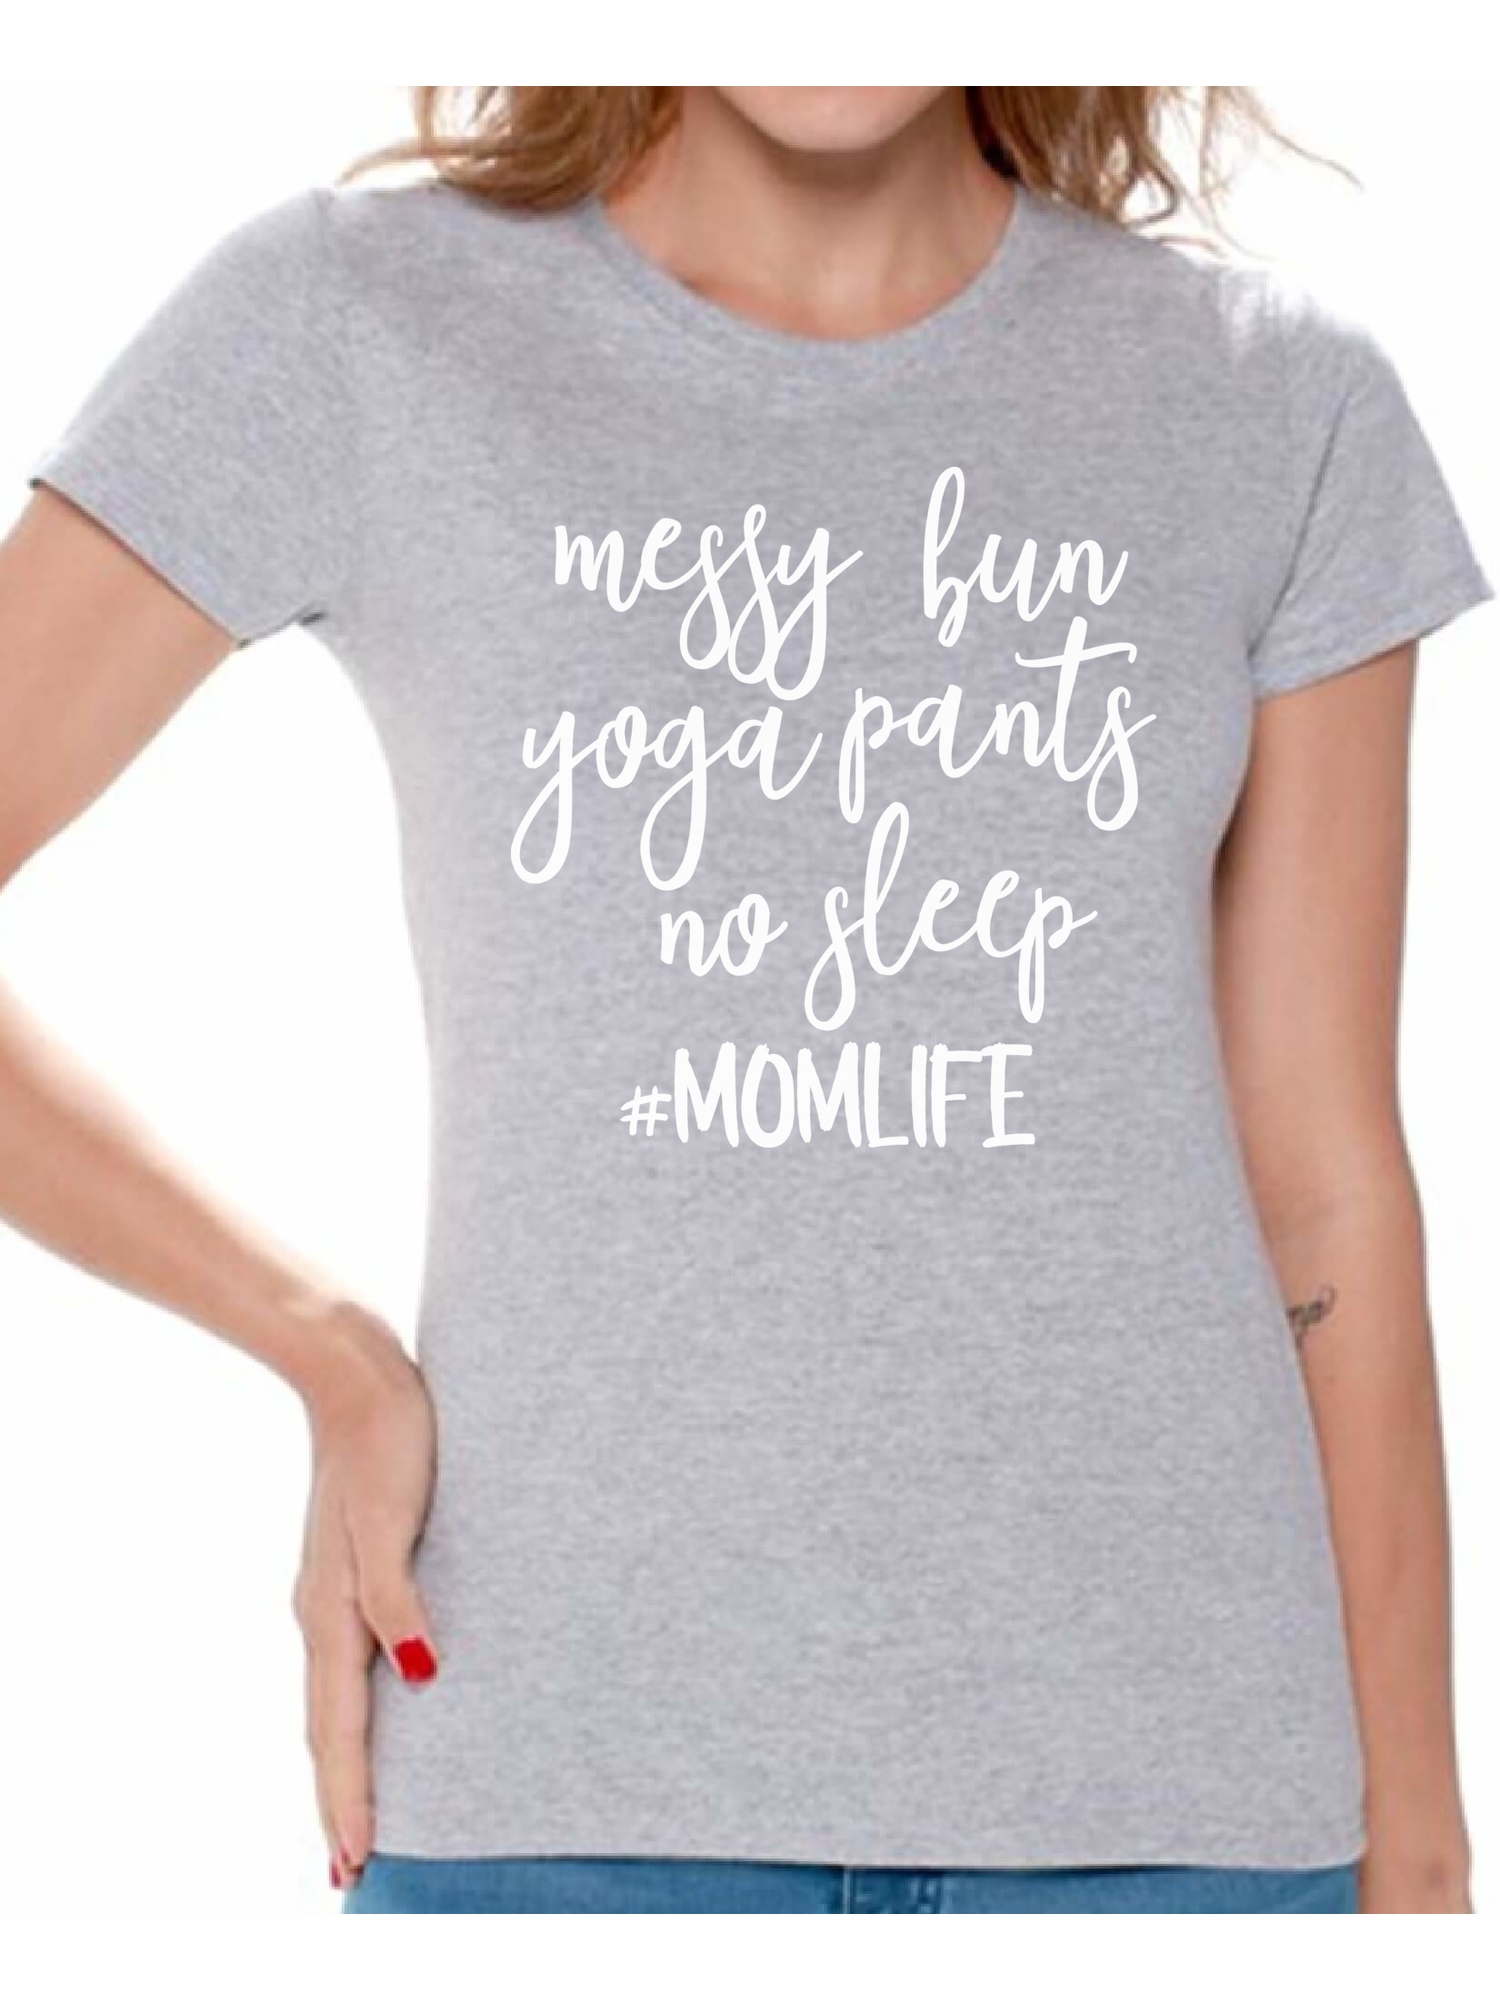 Awkward Styles Women's Messy Bun Yoga Pants No Sleep Momlife Hashtag Graphic T-shirt Tops White - image 1 of 4